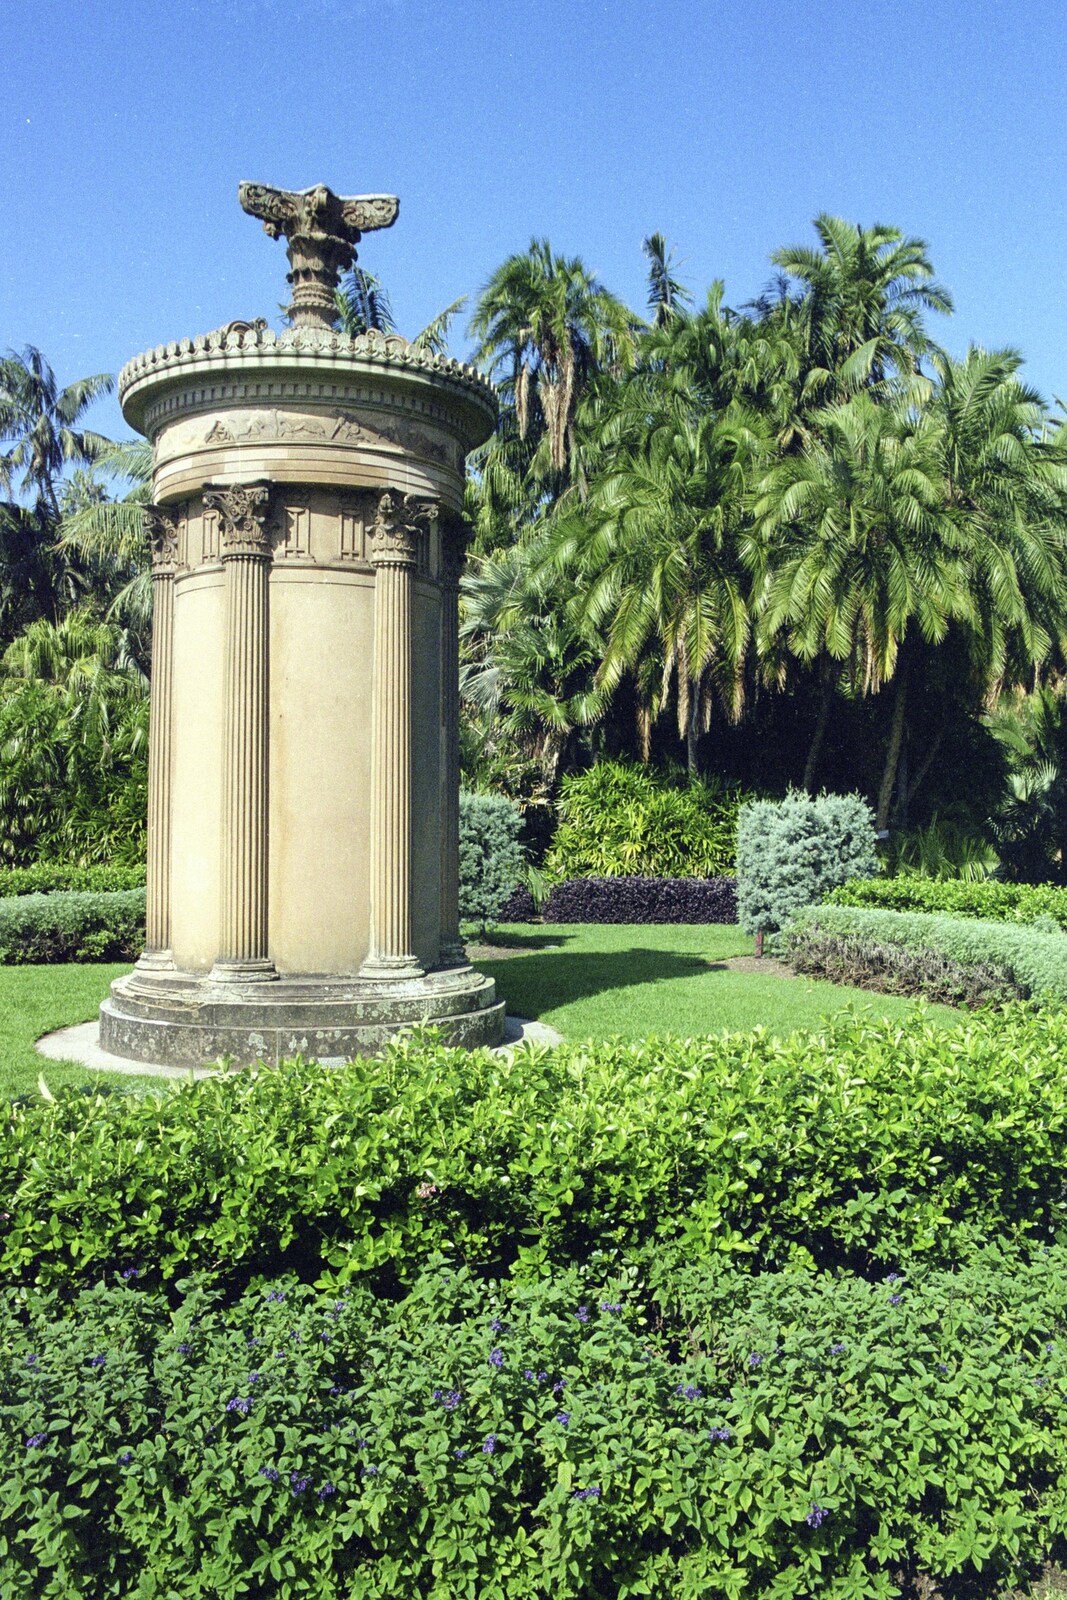 A botanical statue from Sydney Triathlon, Sydney, Australia - 16th April 2000